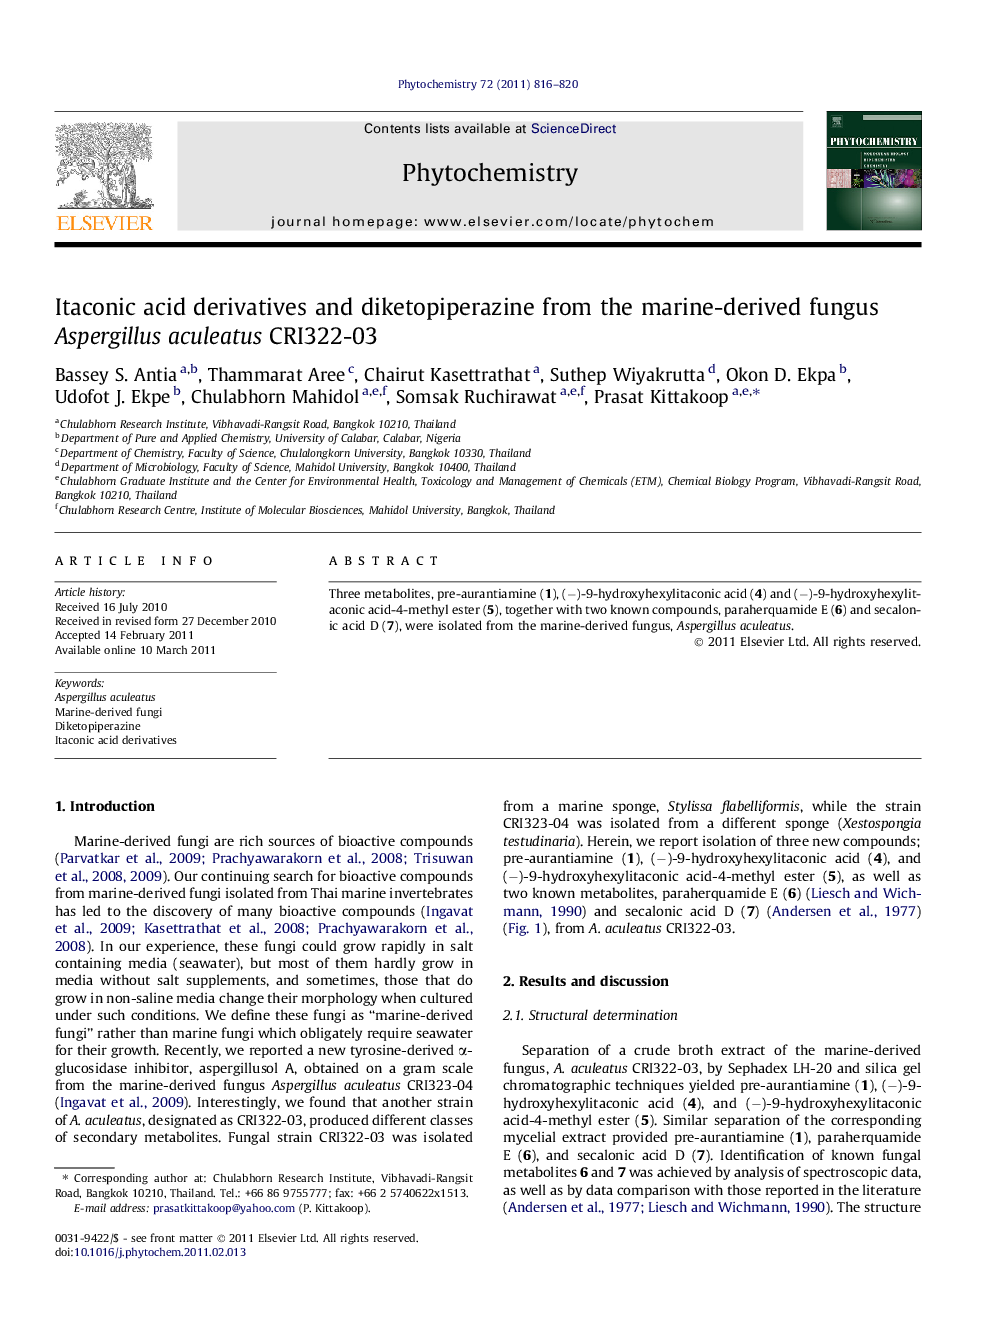 Itaconic acid derivatives and diketopiperazine from the marine-derived fungus Aspergillus aculeatus CRI322-03